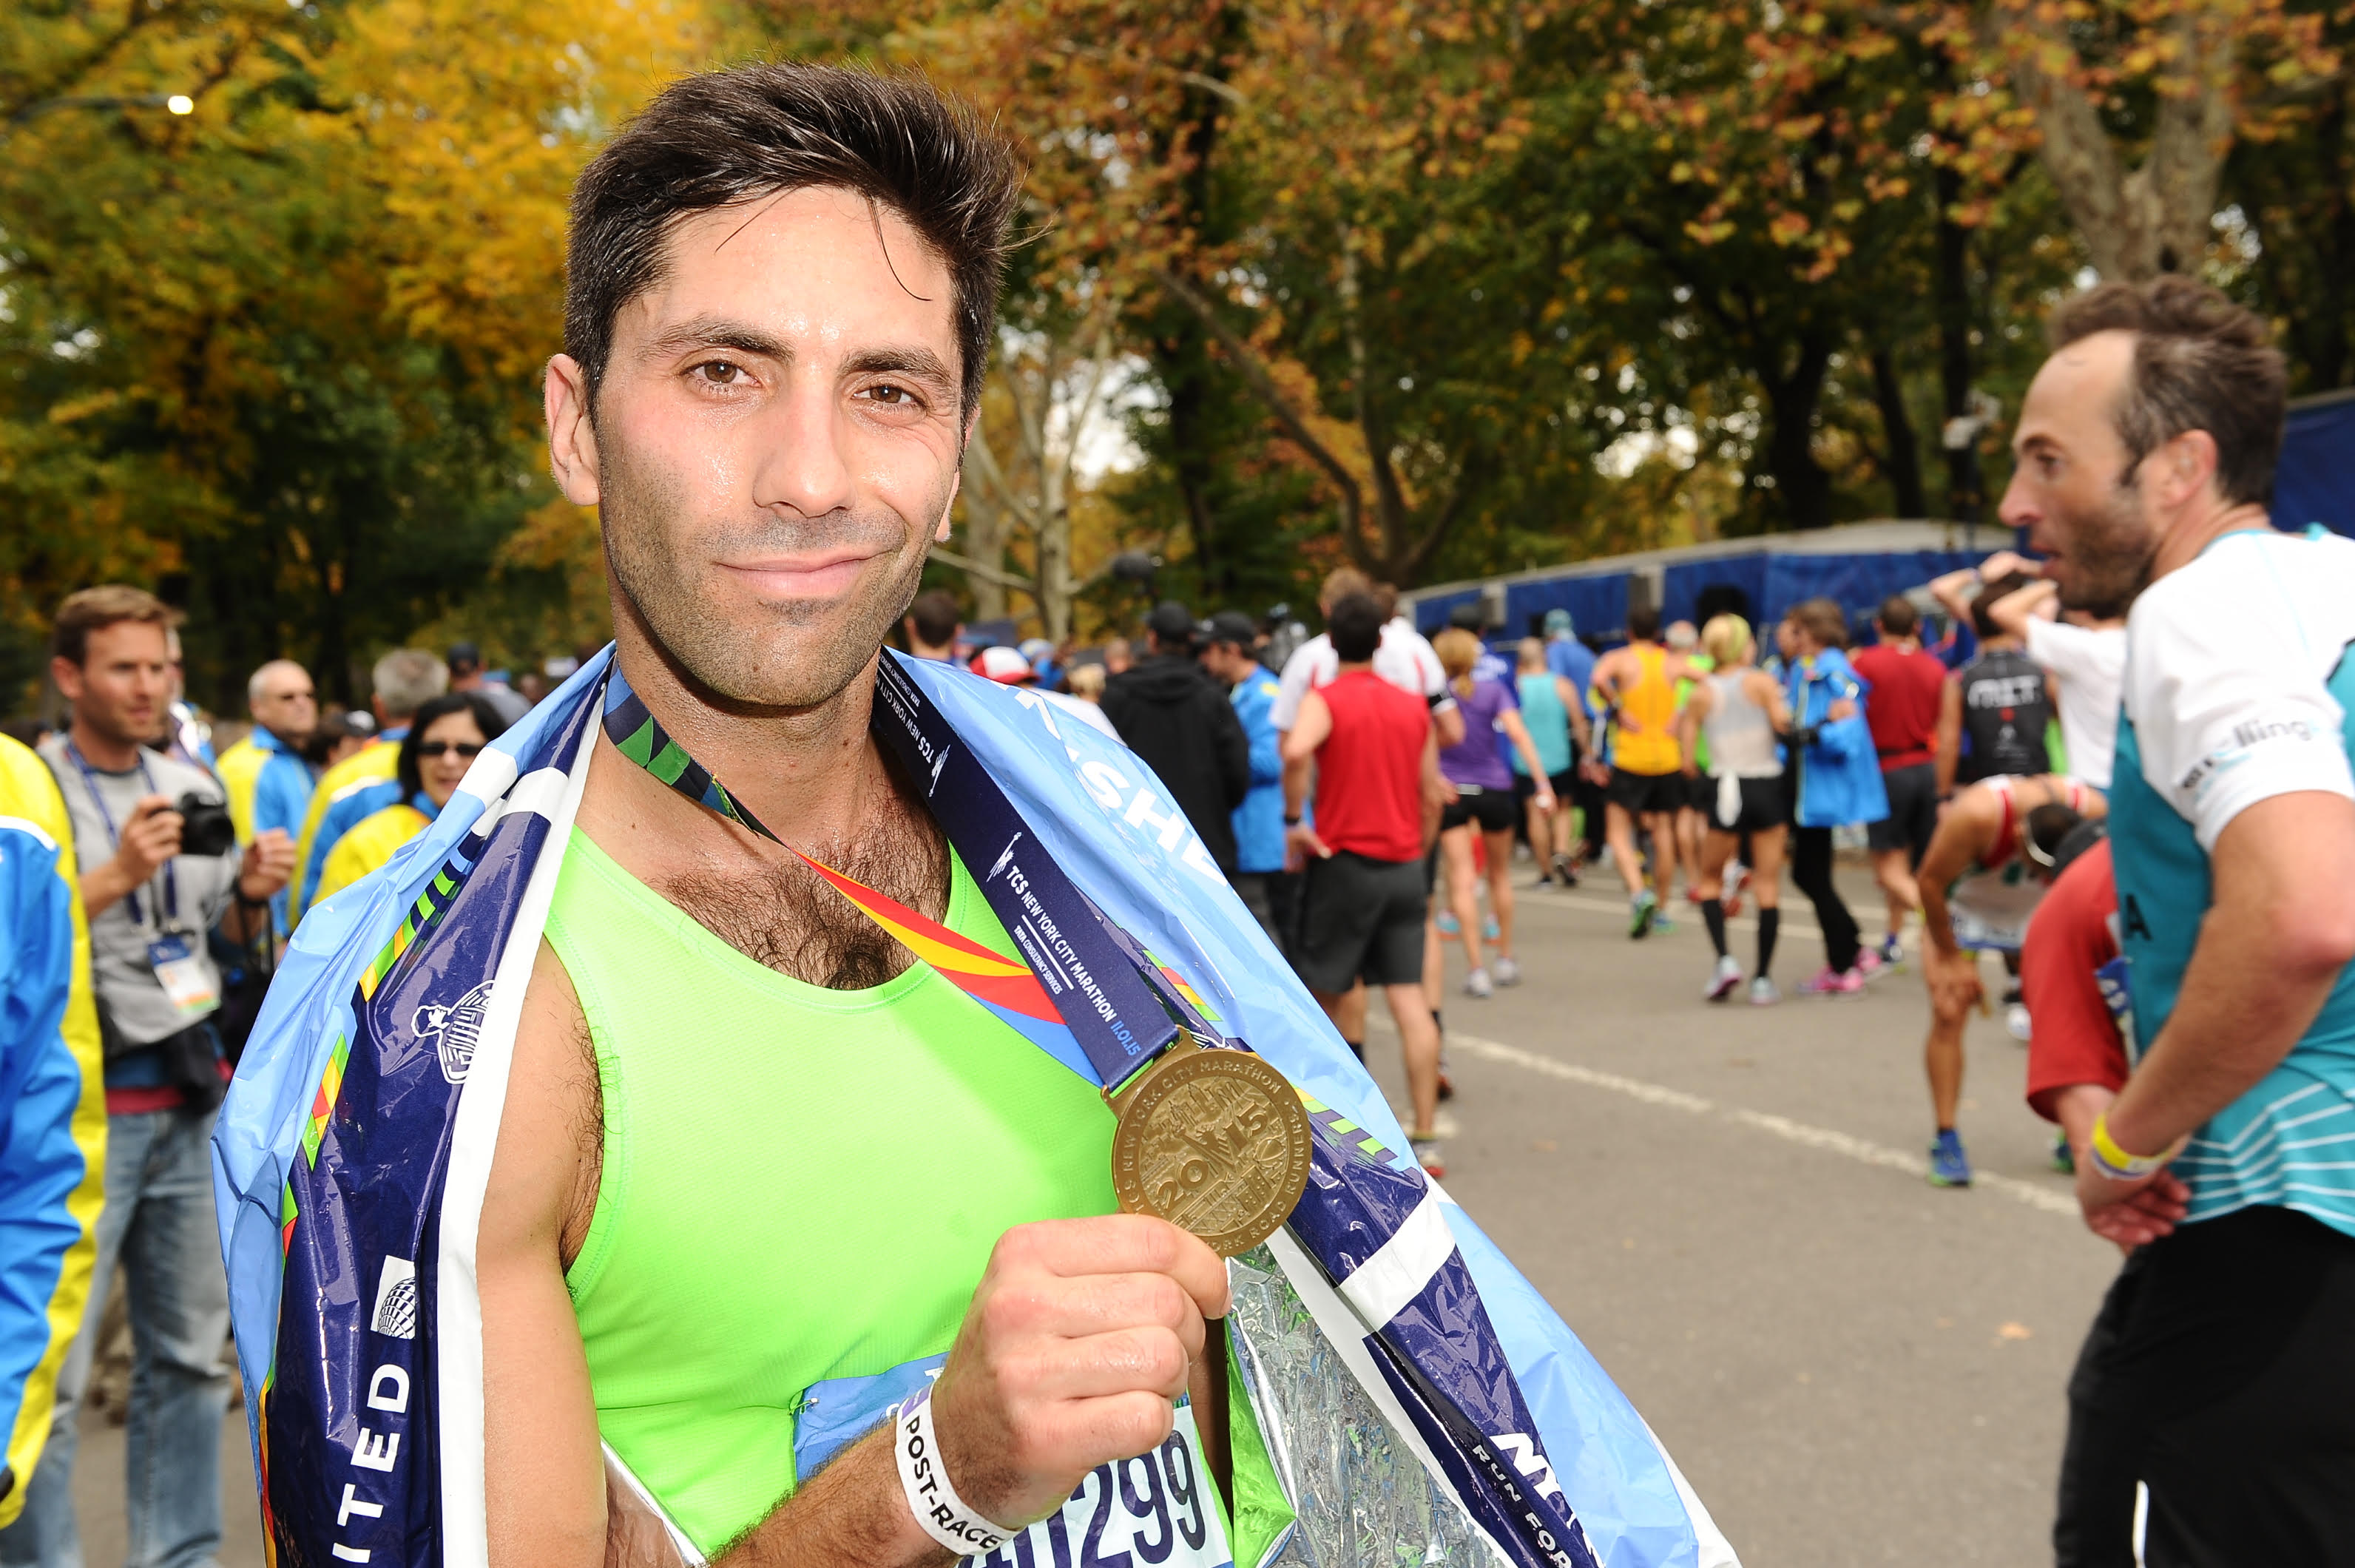 Nev Schulman runs New York Marathon